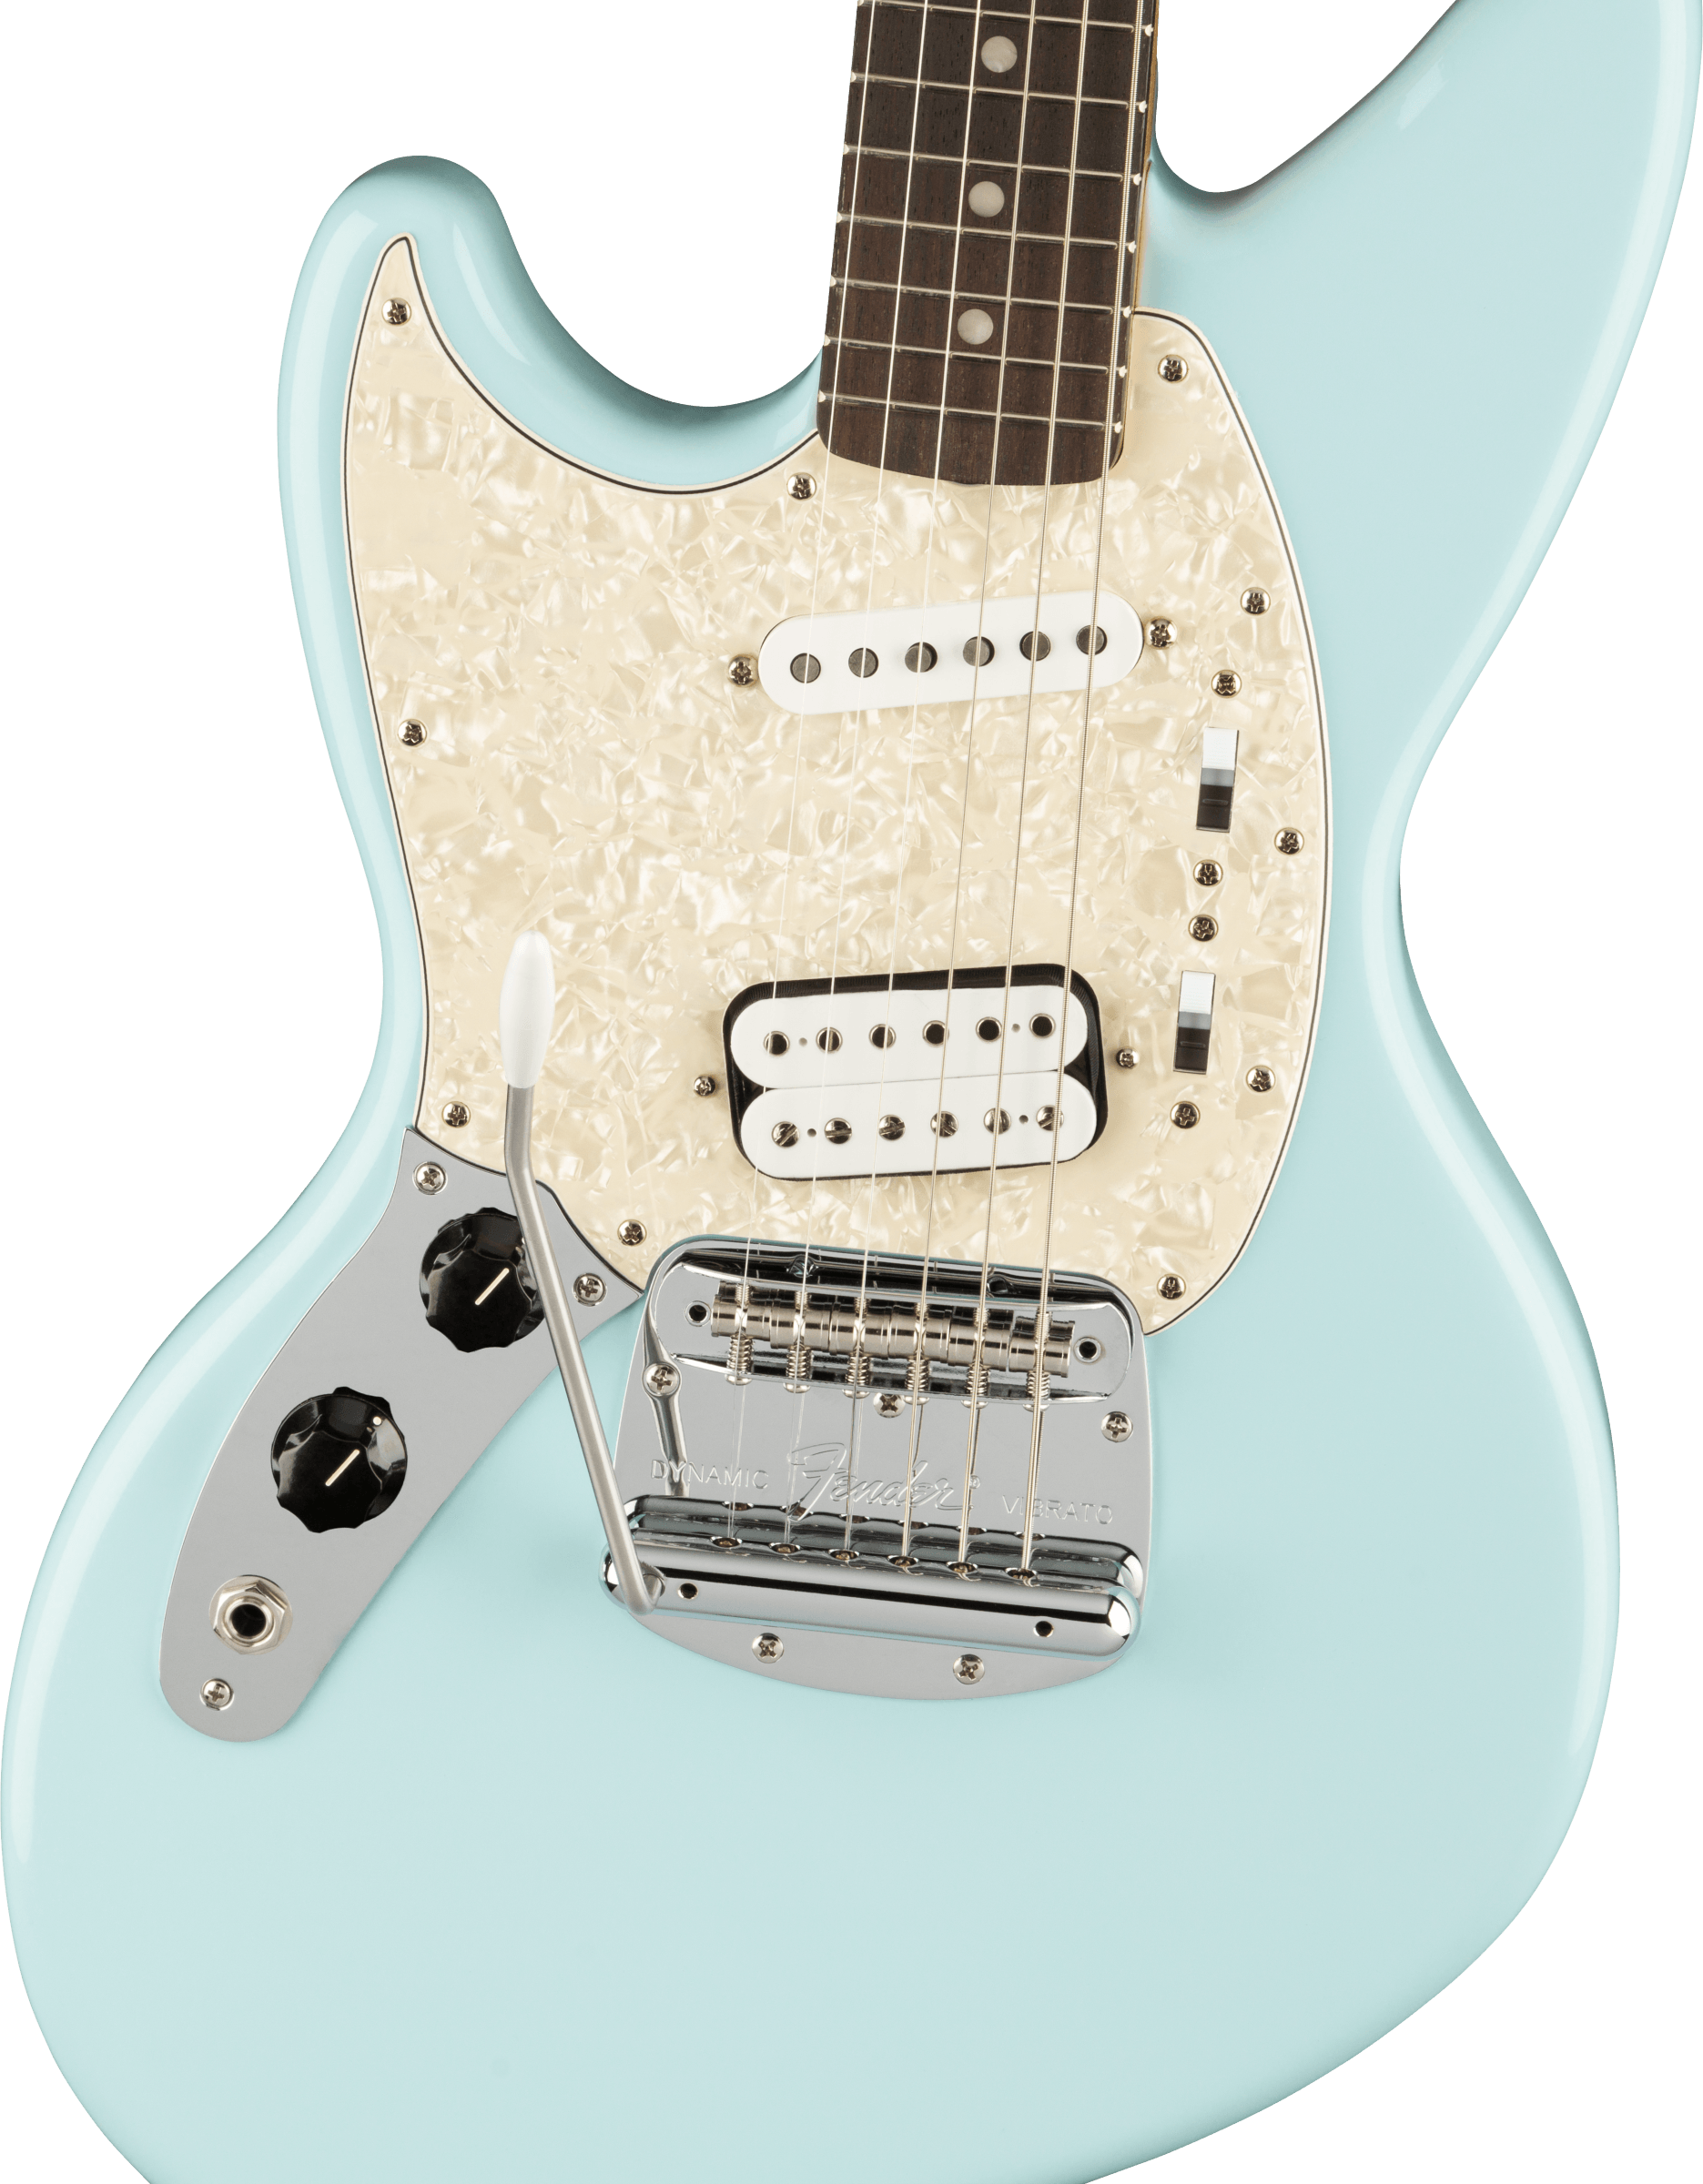 Fender Jag-stang Kurt Cobain Artist Gaucher Hs Trem Rw - Sonic Blue - Left-handed electric guitar - Variation 2